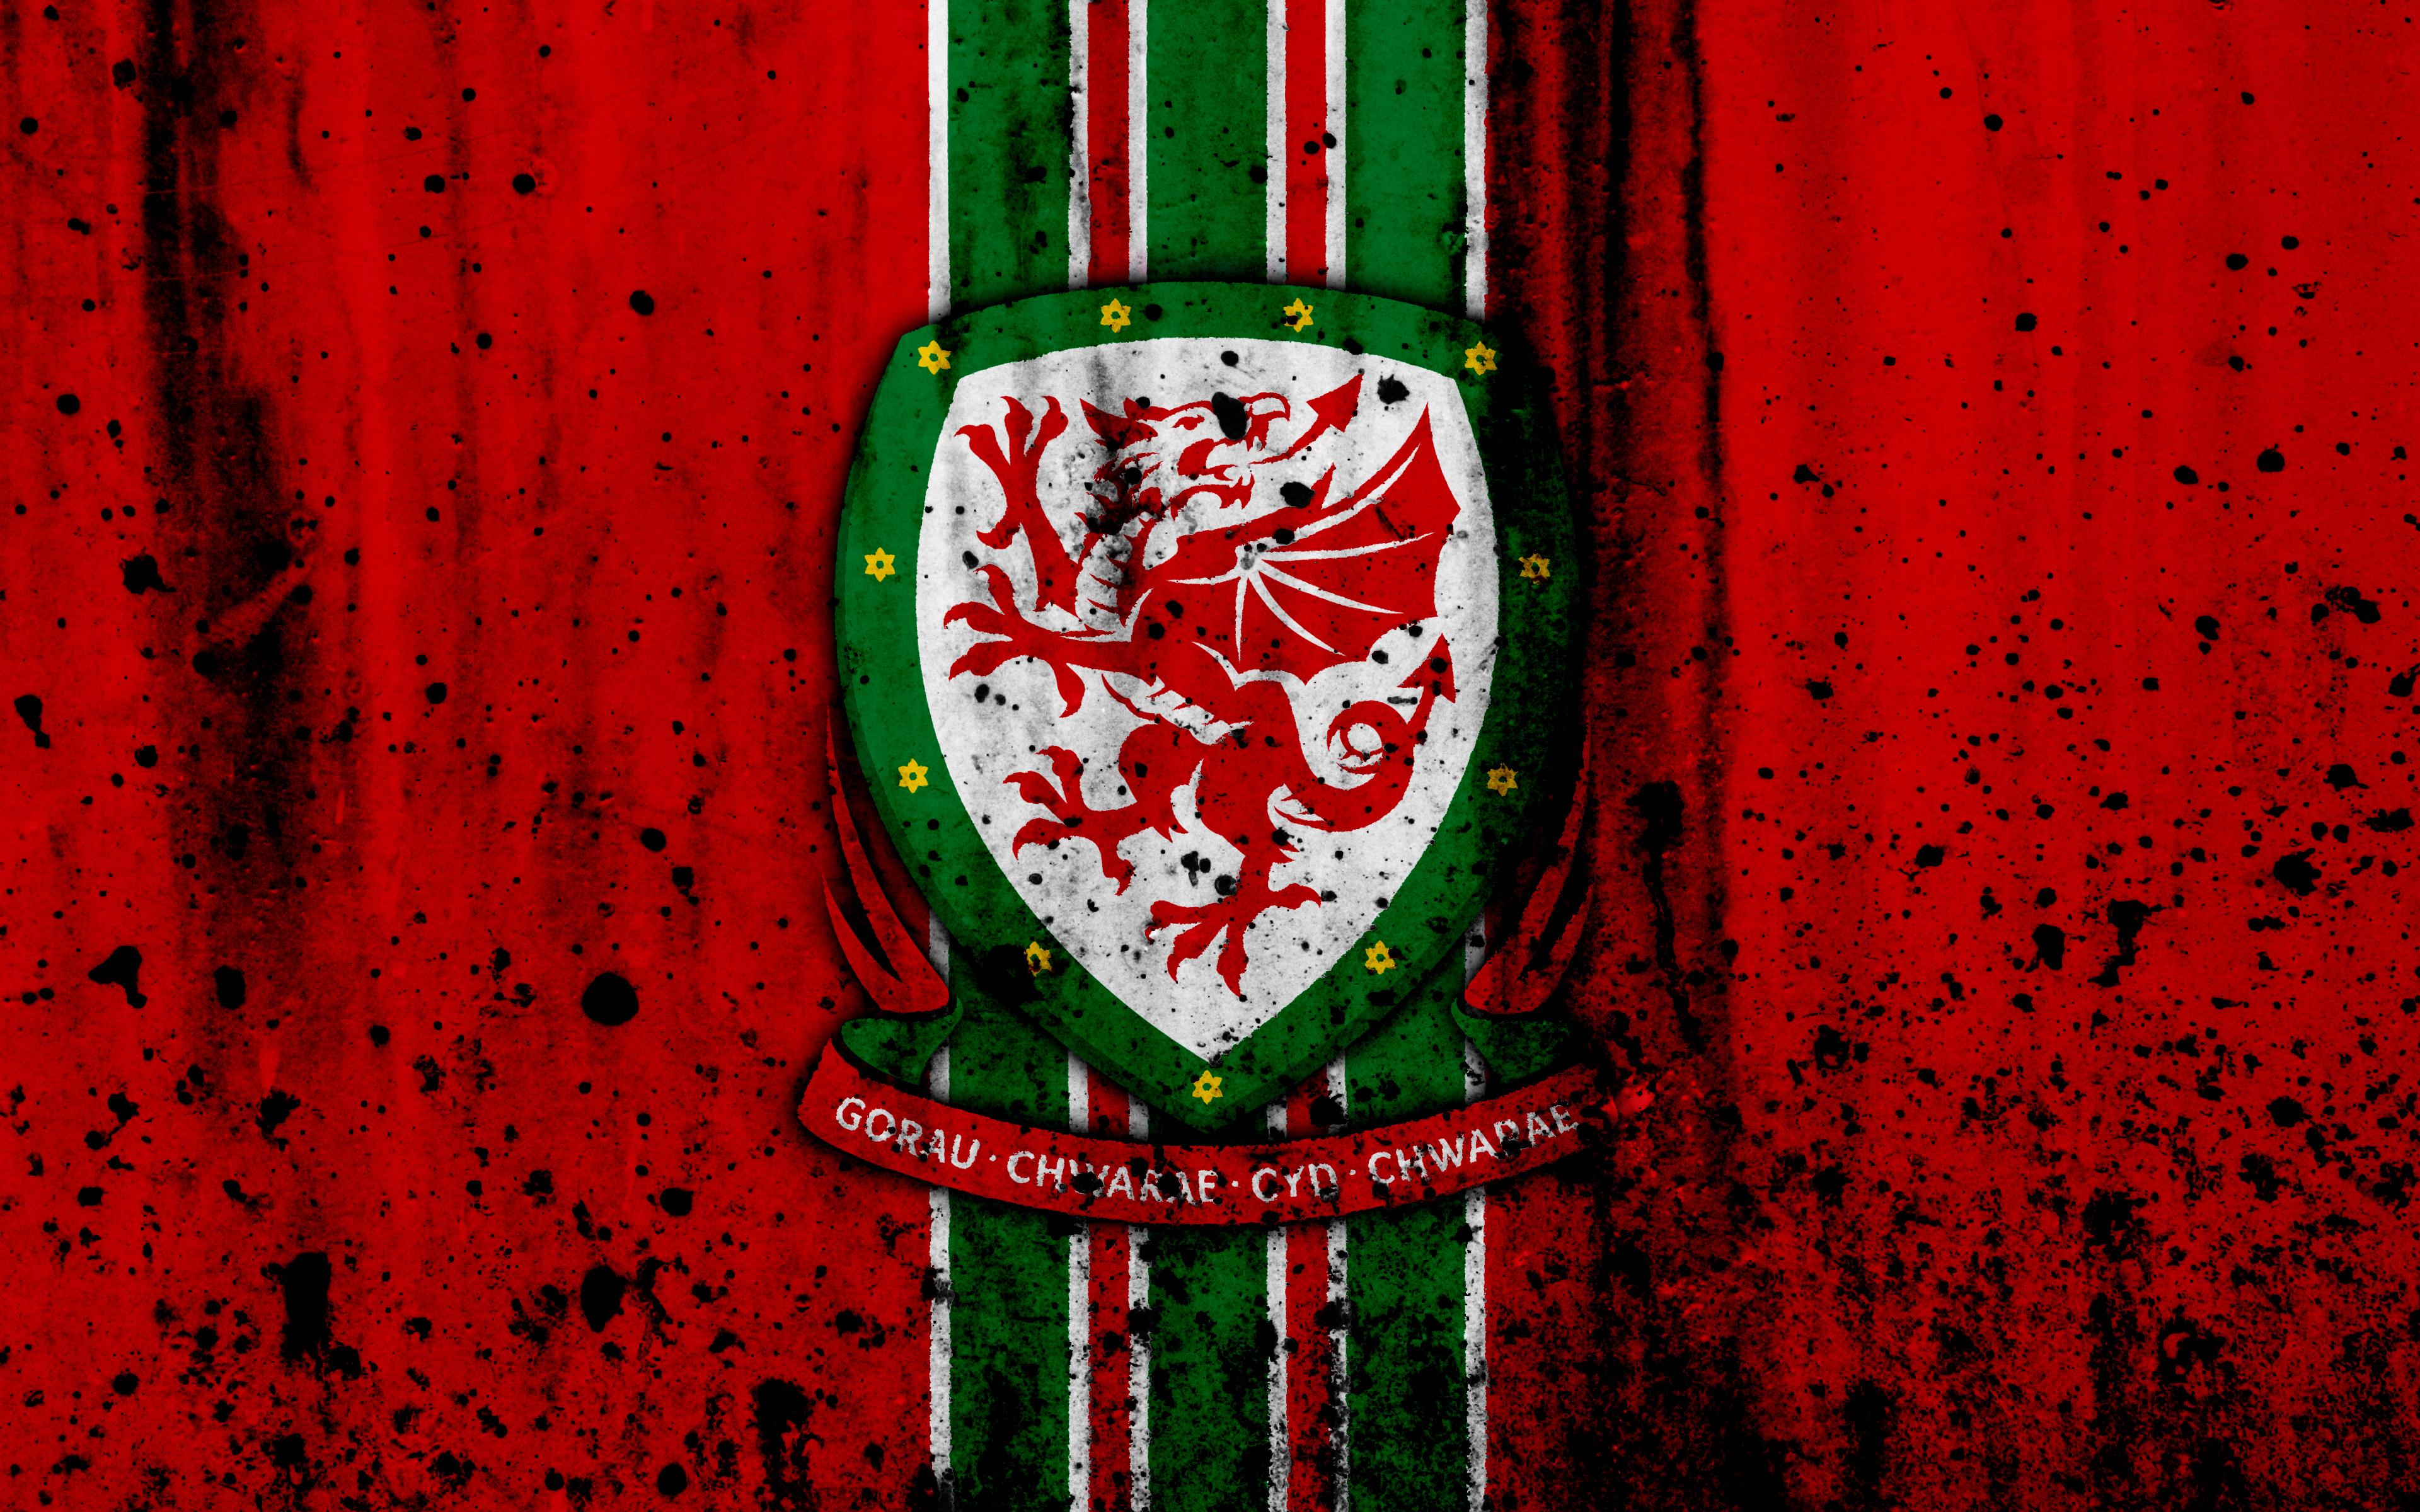 Wales National Football Team 4k Ultra HD Wallpaper. Background